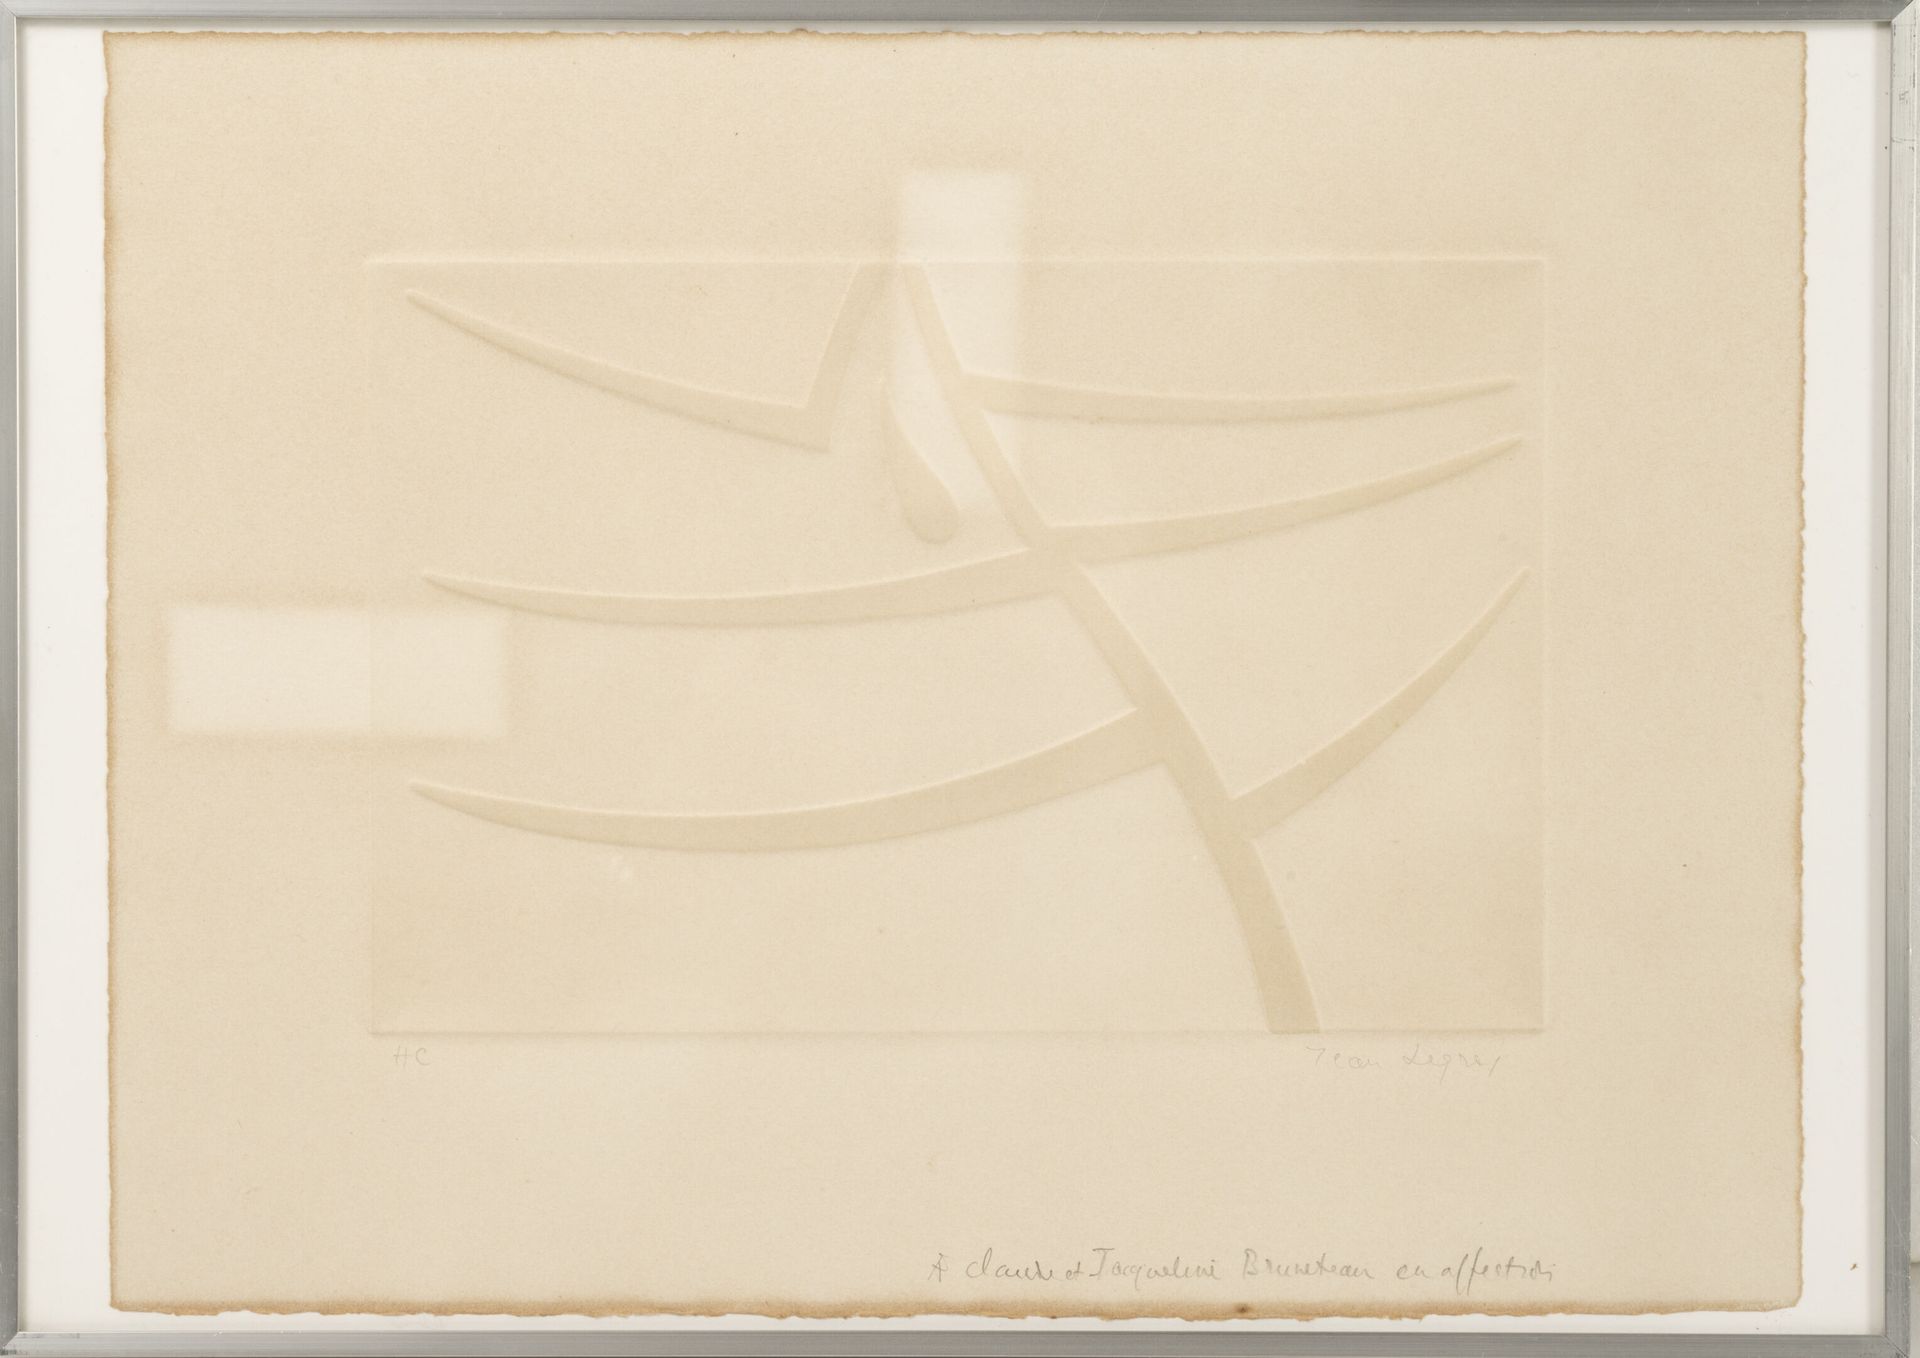 Jean LEGROS (1917-1981) 无题，浮雕。
在纸上打印，脱稿打印。
右下角有签名和题词。
28 x 37,5厘米。
显著的狐臭和污渍。